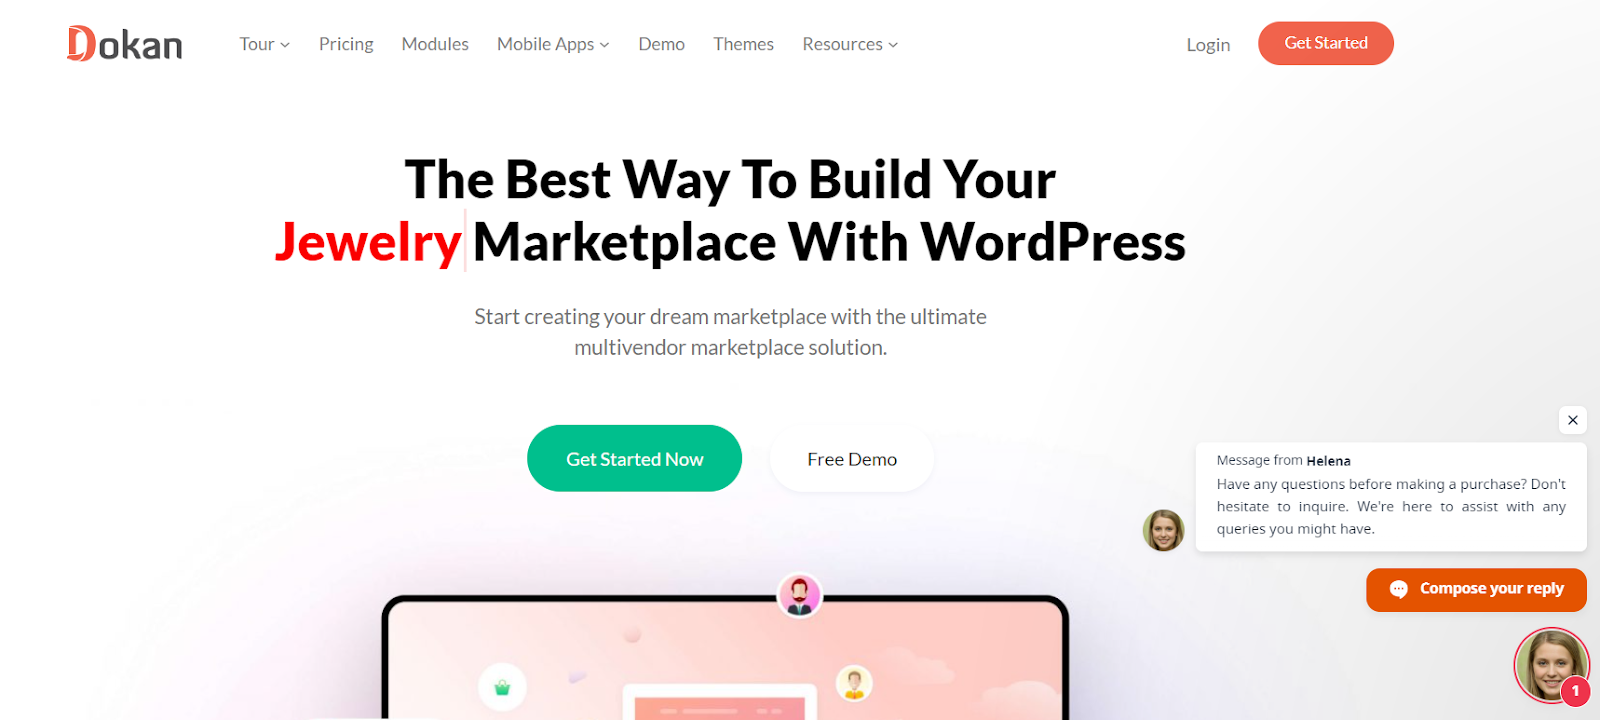 multi vendor marketplace platform